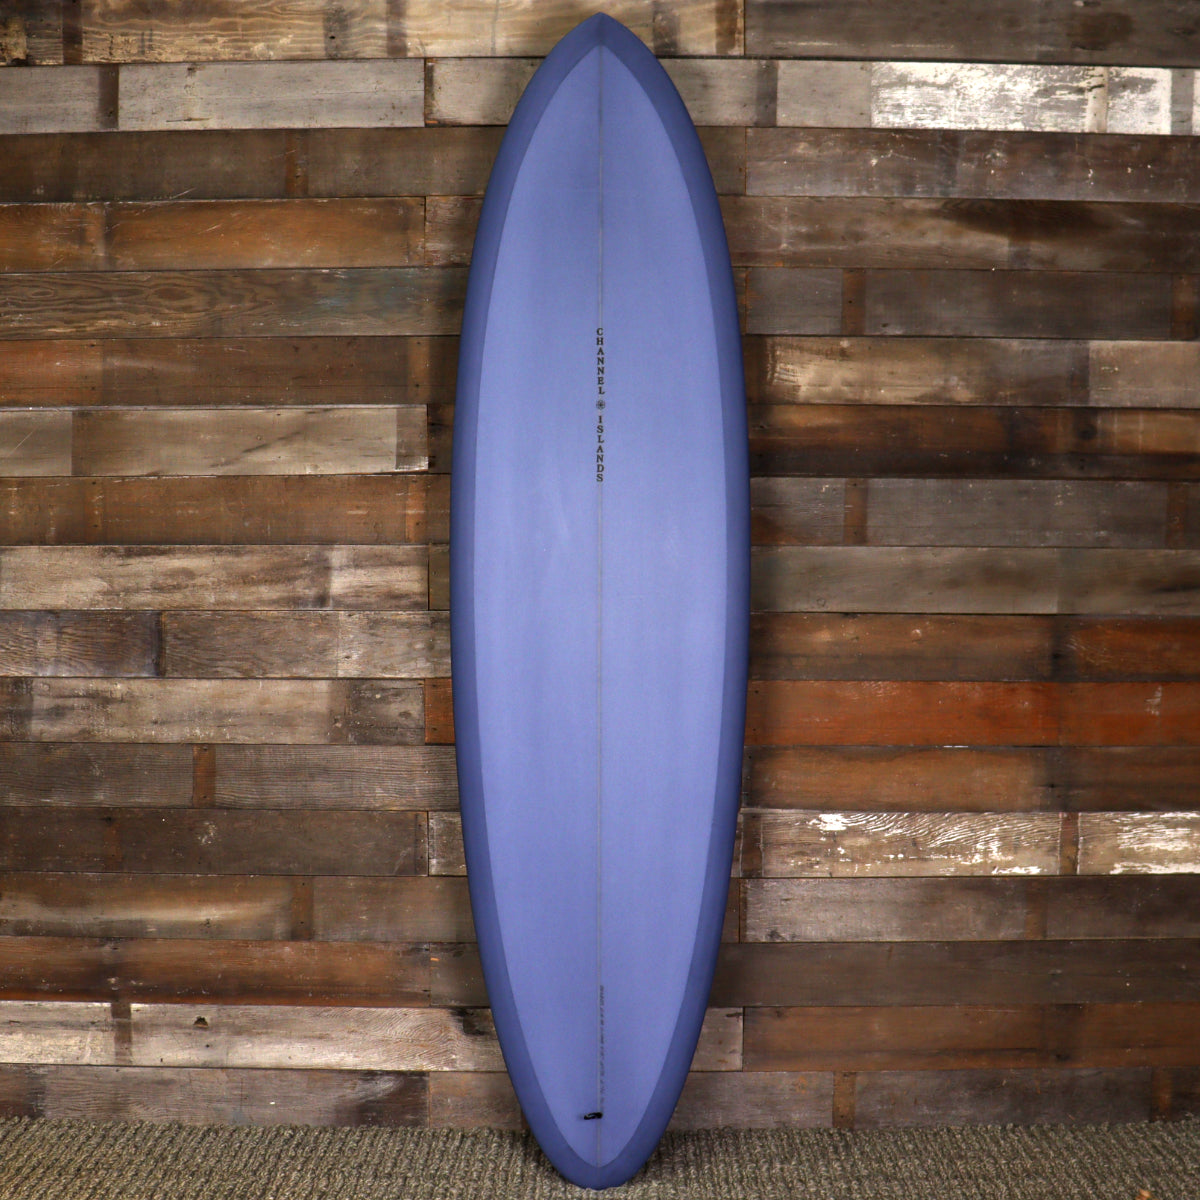 Channel Islands CI Mid 6'10 x 20 ⅞ x 2 11/16 Surfboard - Blue 